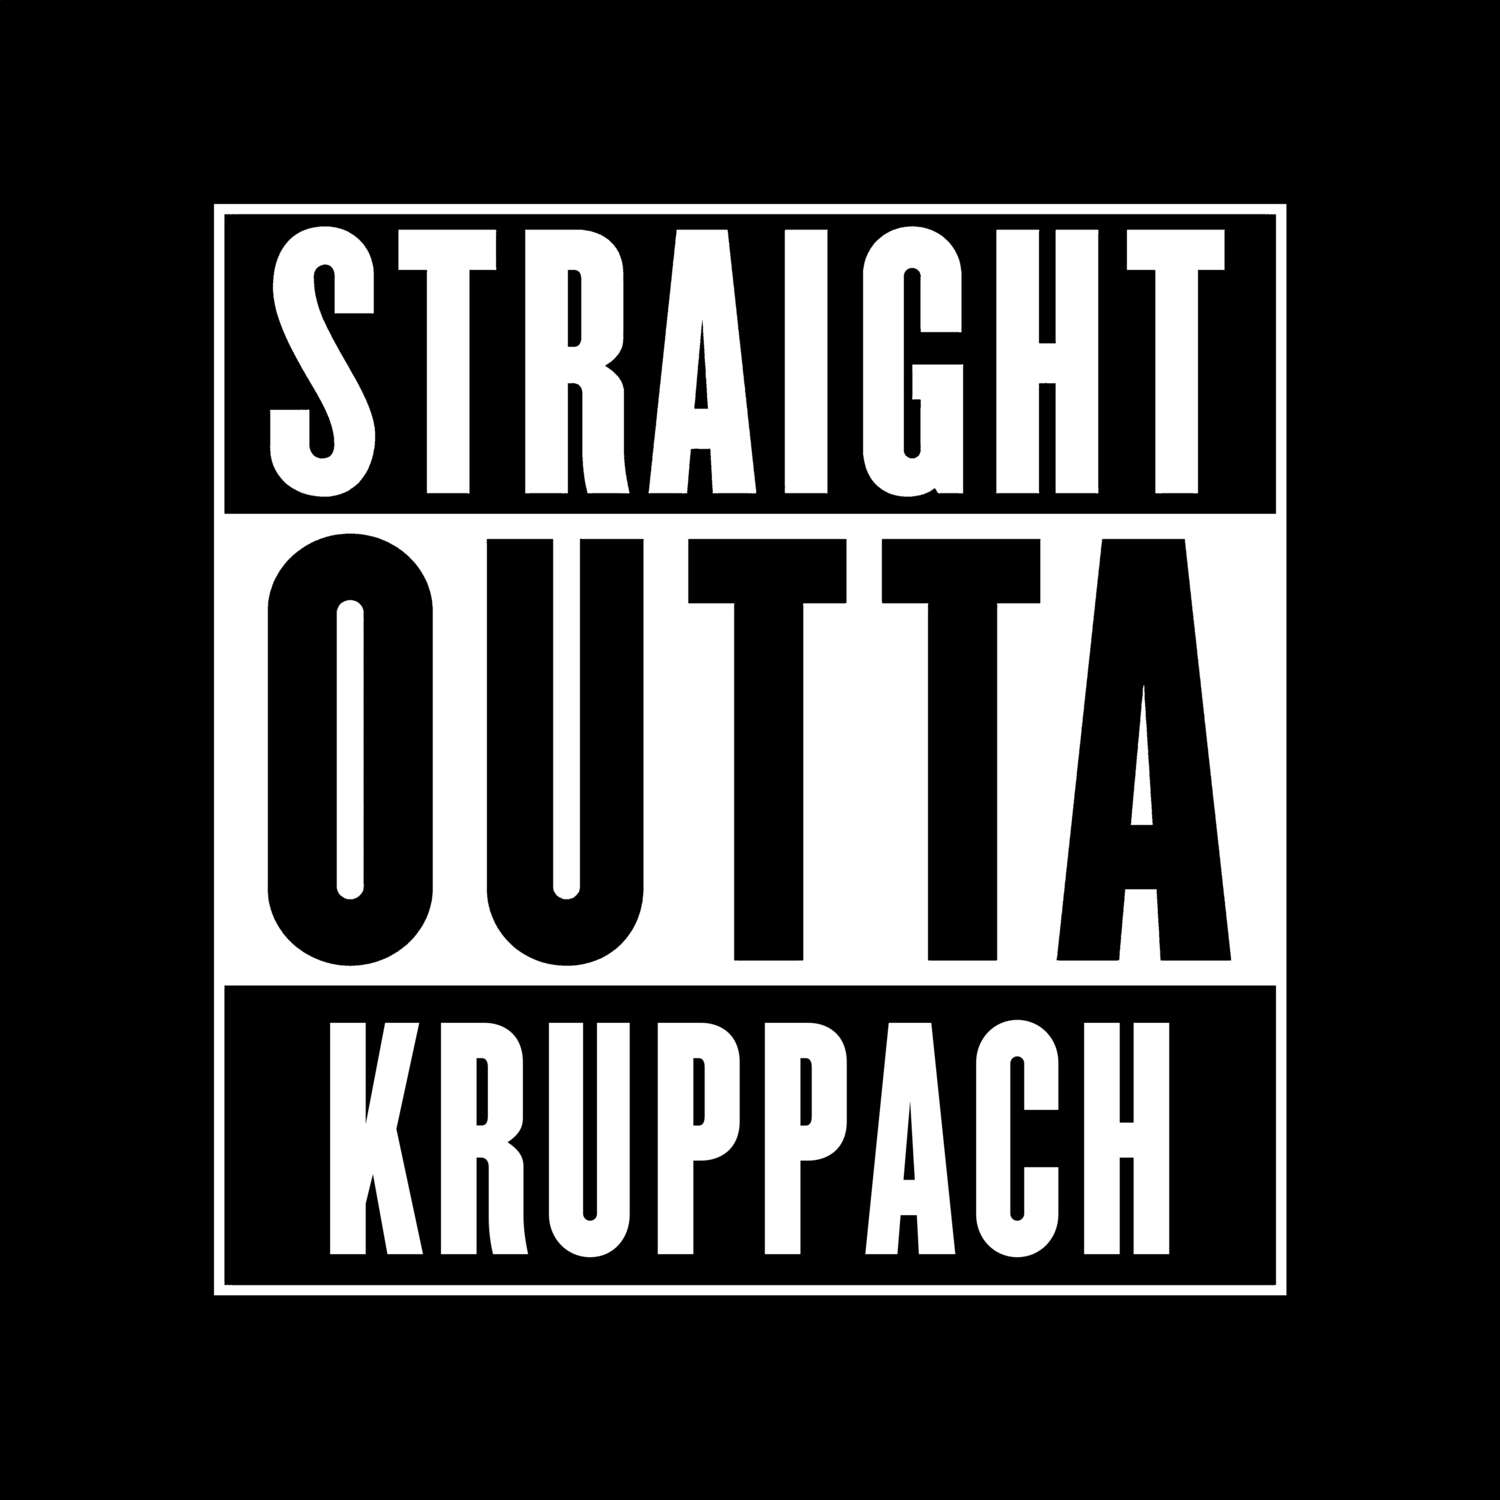 Kruppach T-Shirt »Straight Outta«